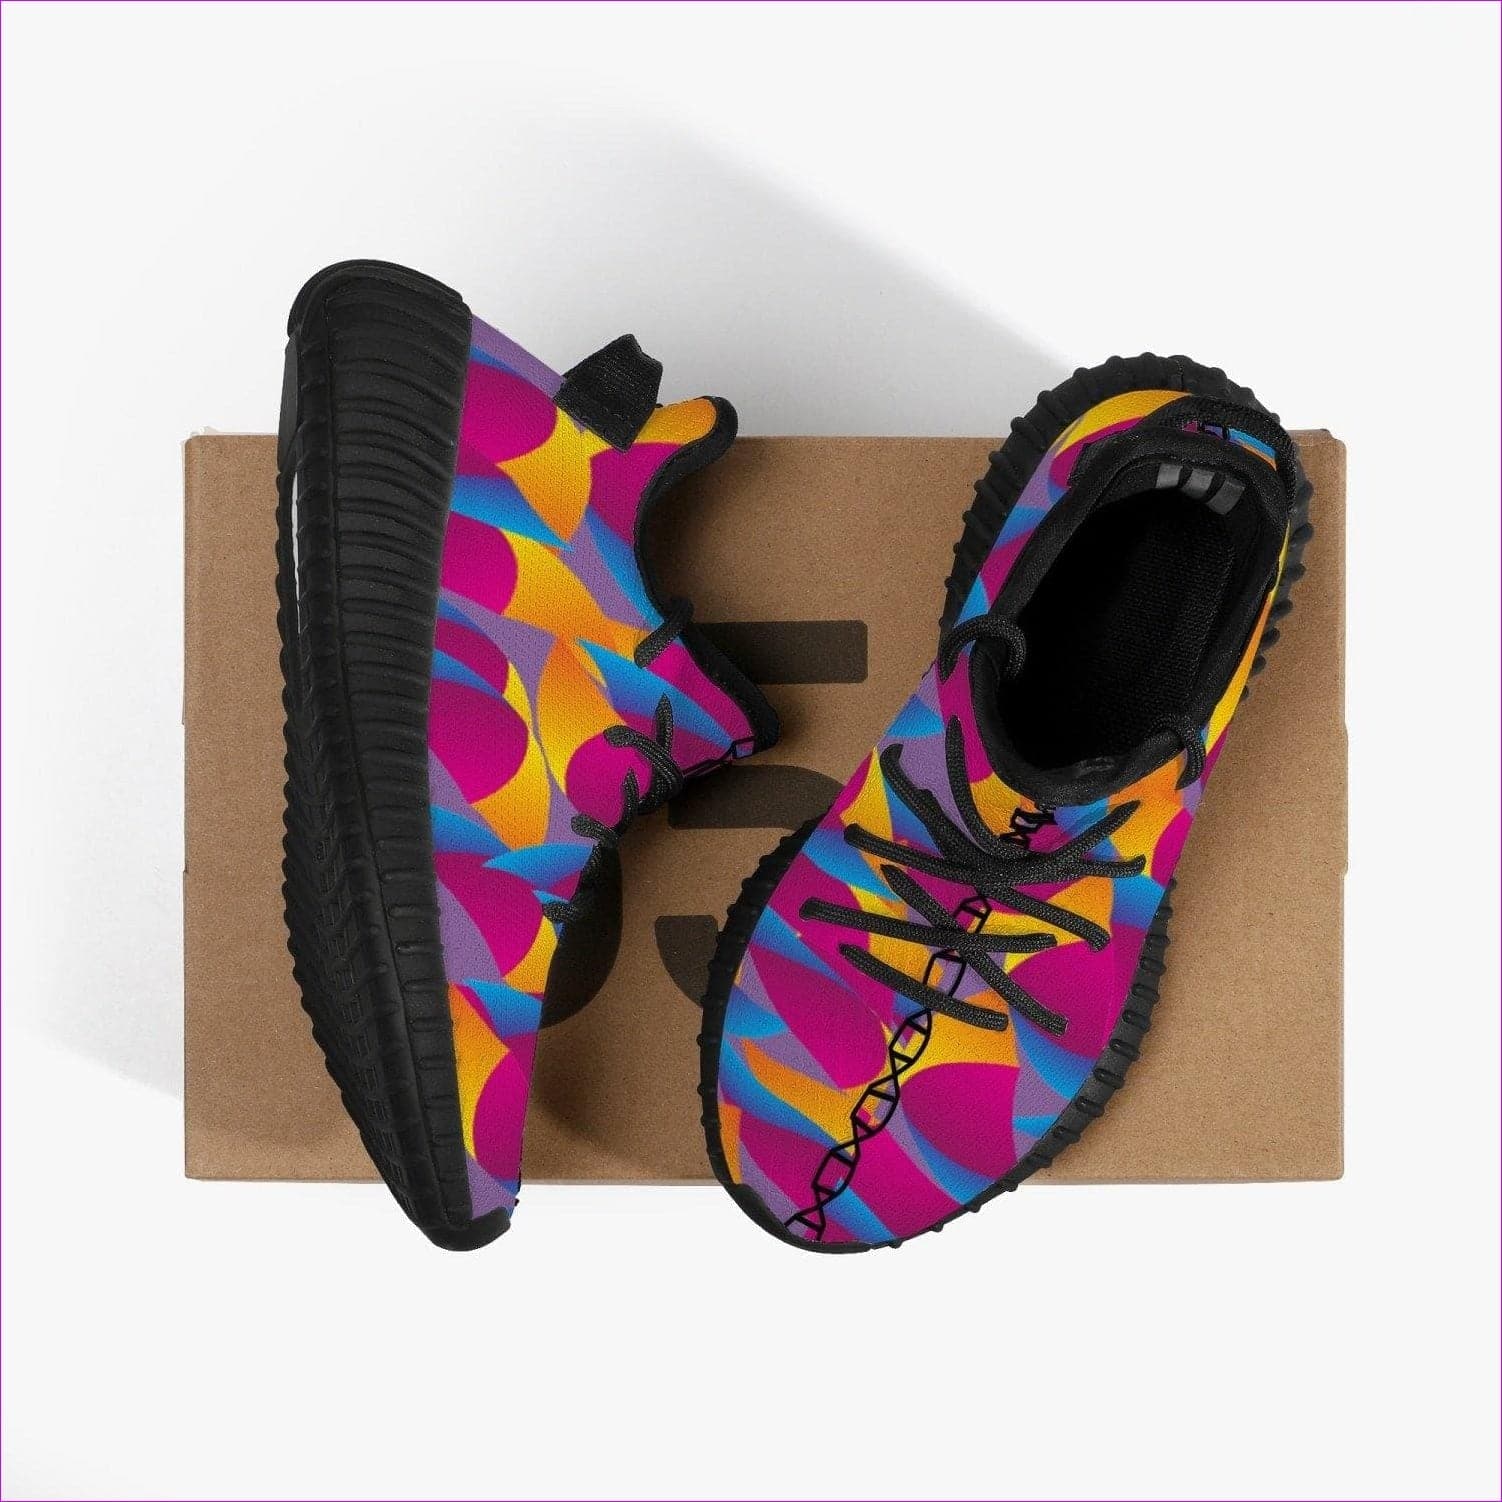 Youth4/EU35 - Vibrant Thang Kids Mesh Knit Sneakers - Black - kids shoe at TFC&H Co.